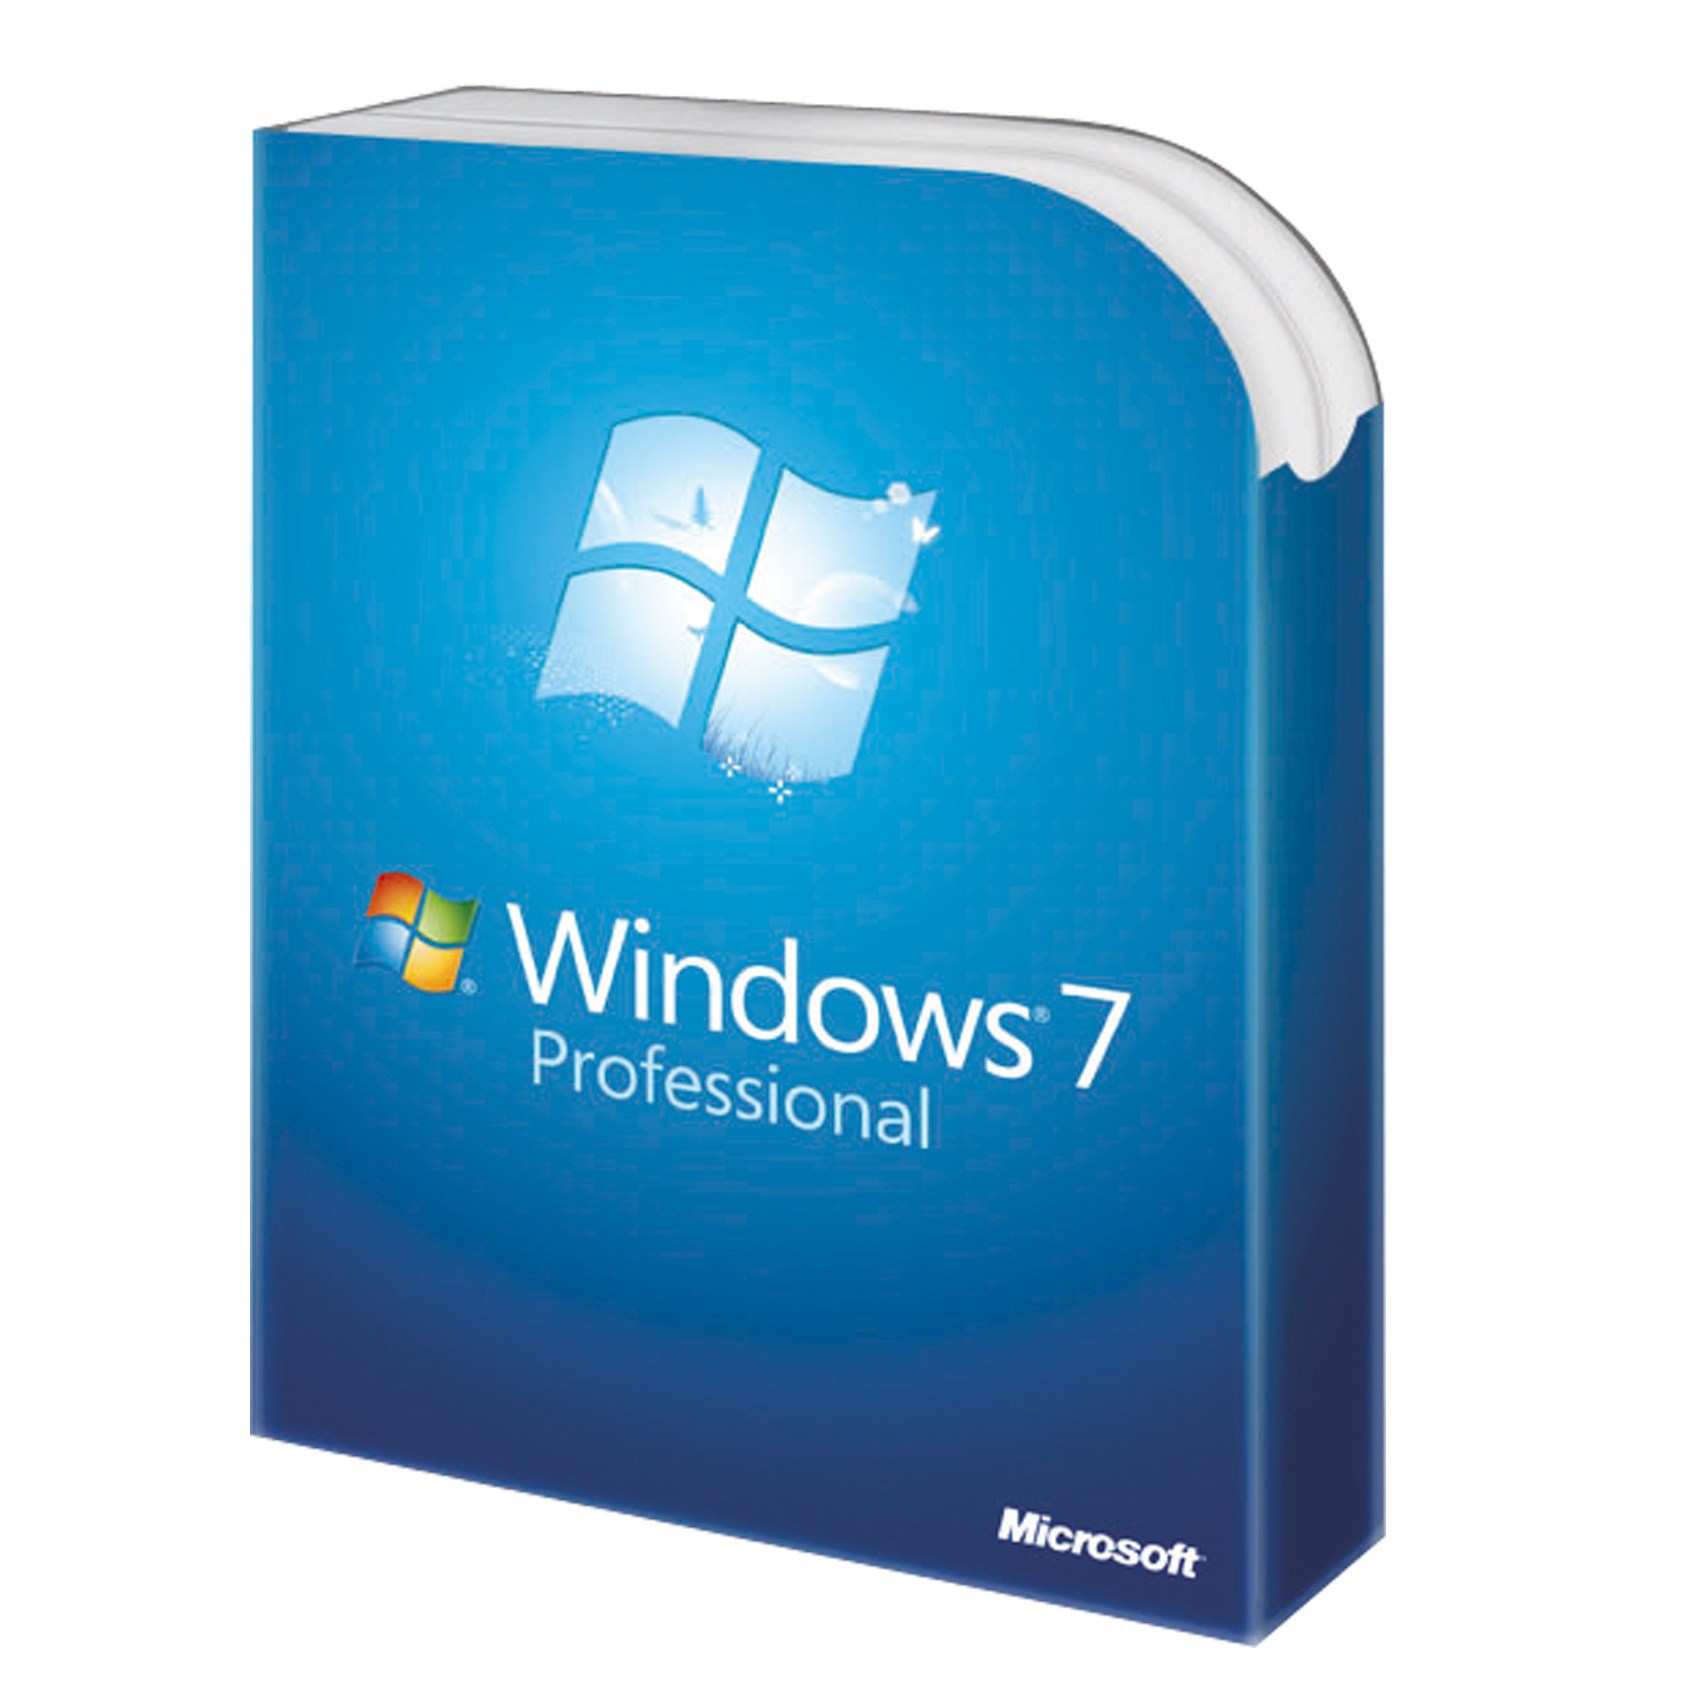 hp windows professional for refurb pcs 7 starter iso